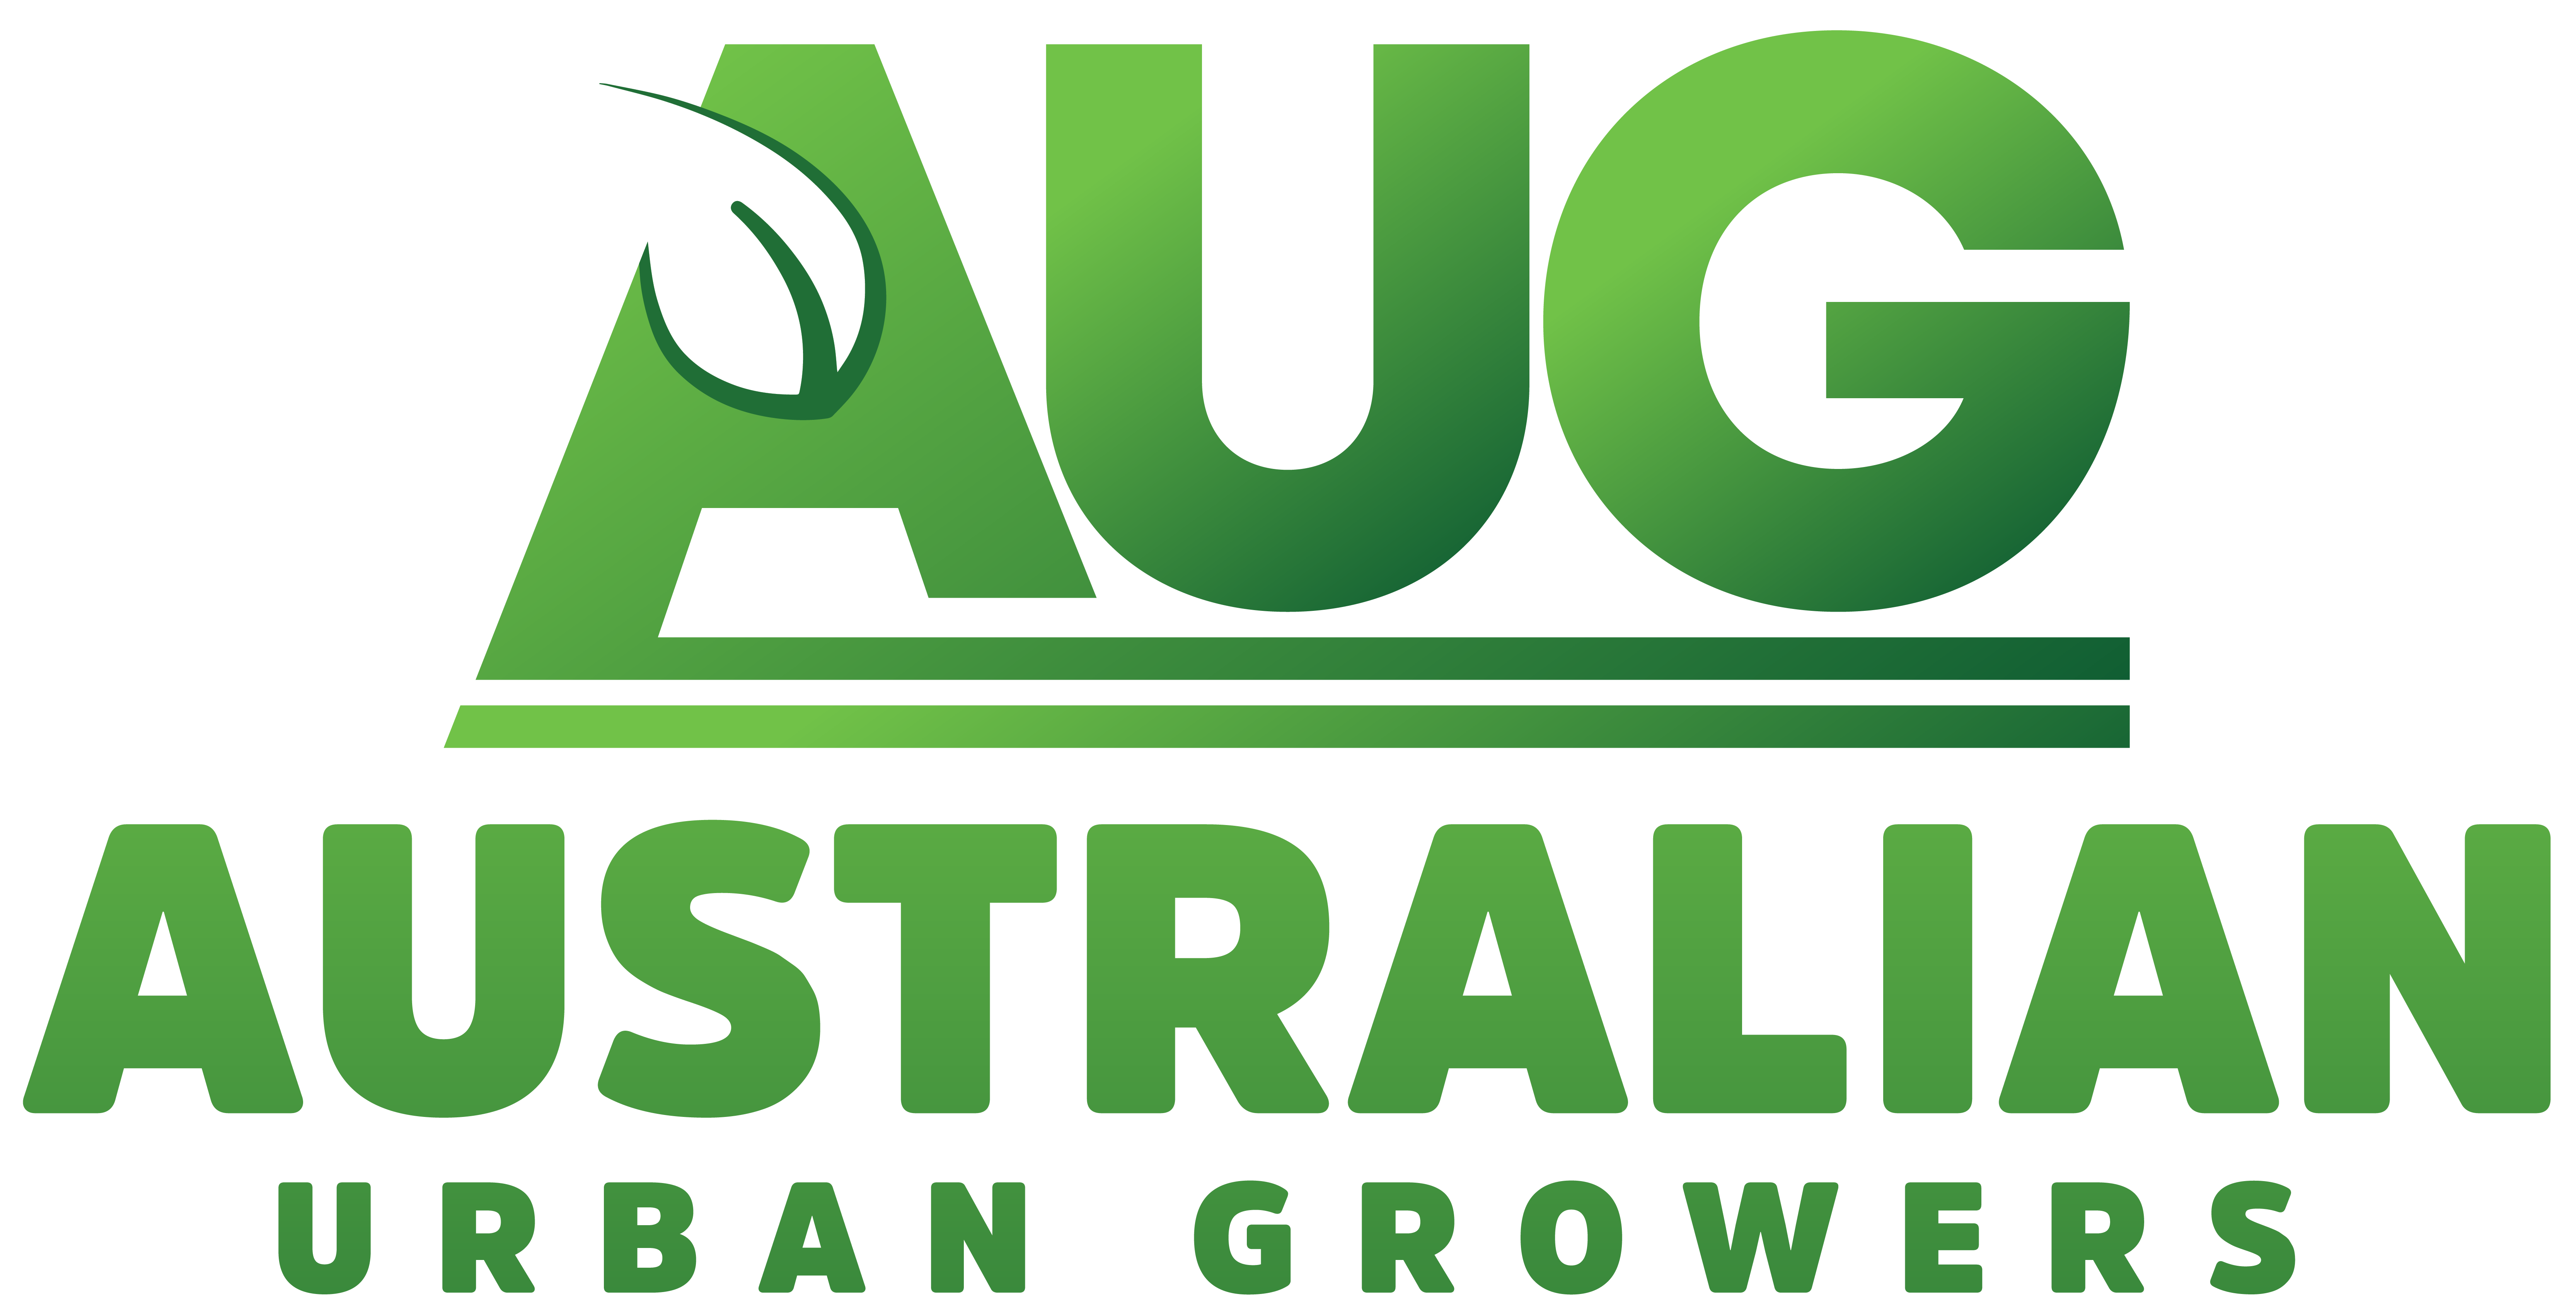 Australian Urban Growers